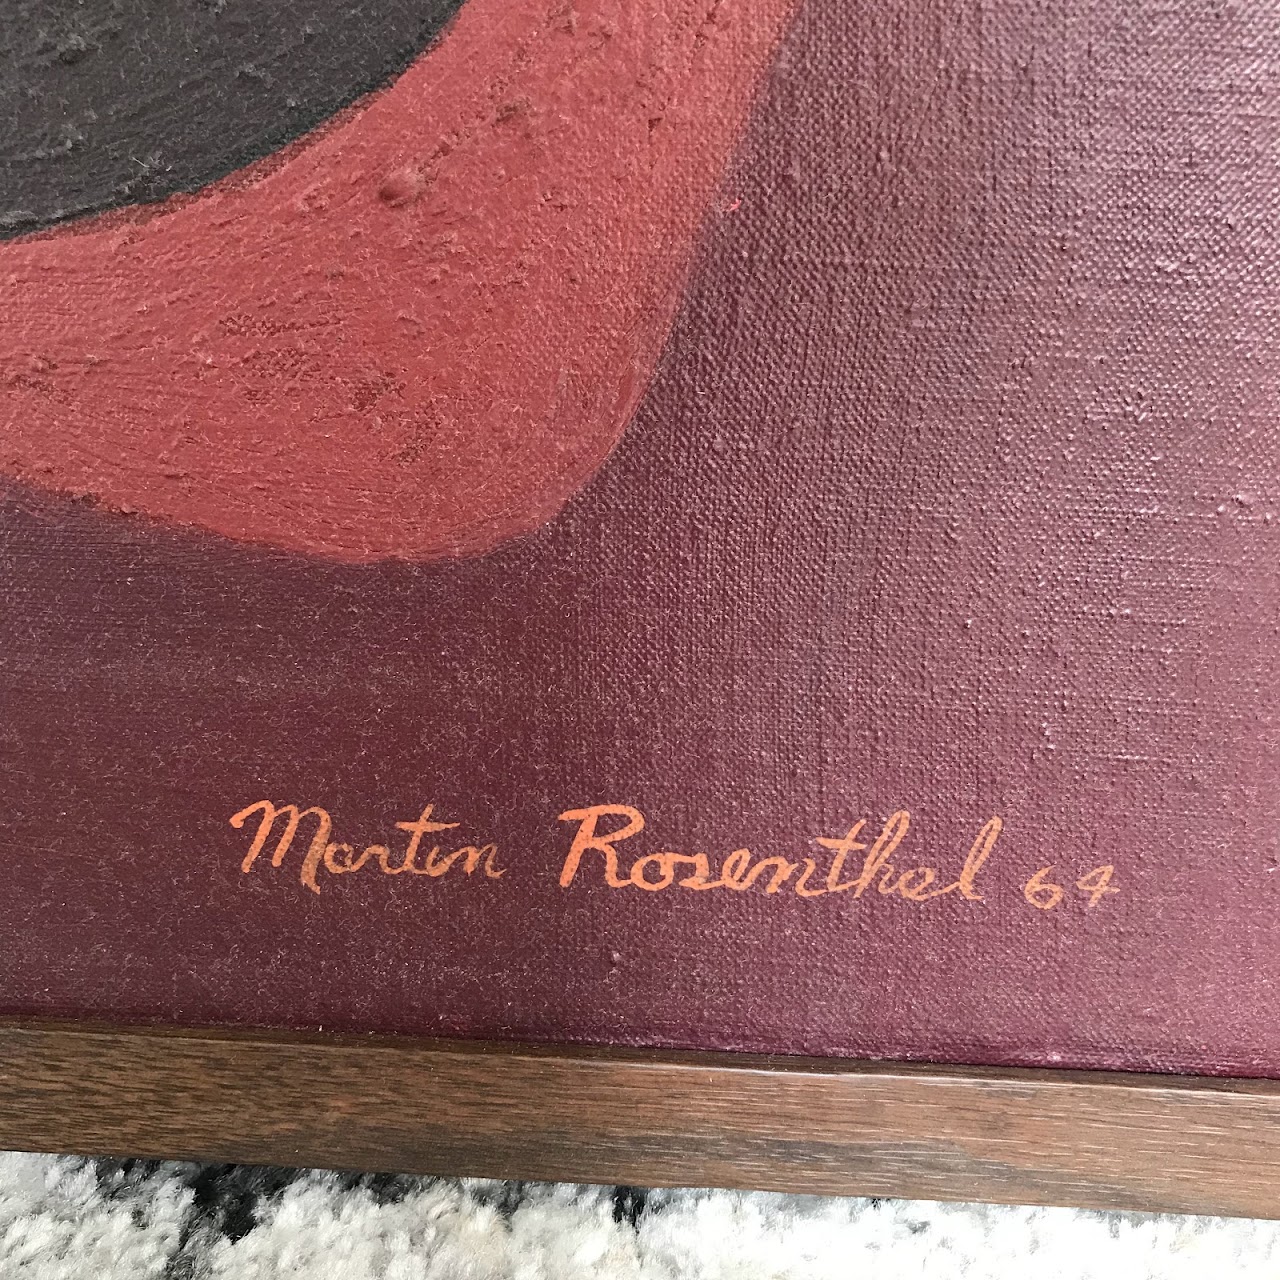 Martin Rosenthal Signed Modernist Oil Painting